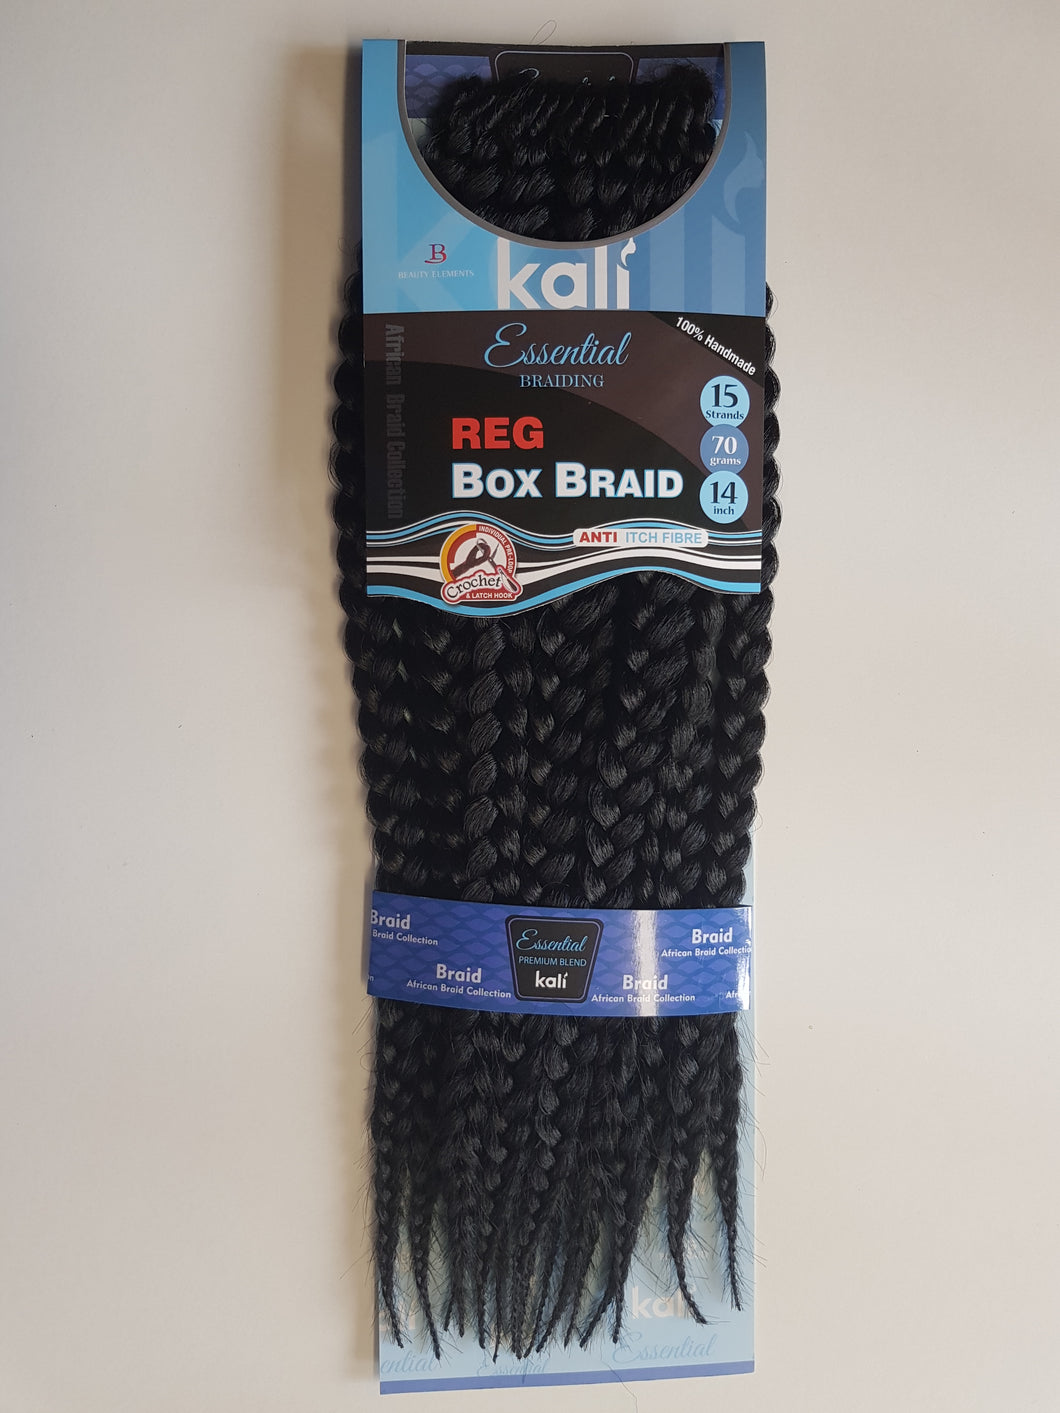 Kali Essential Reg Box Braid 14